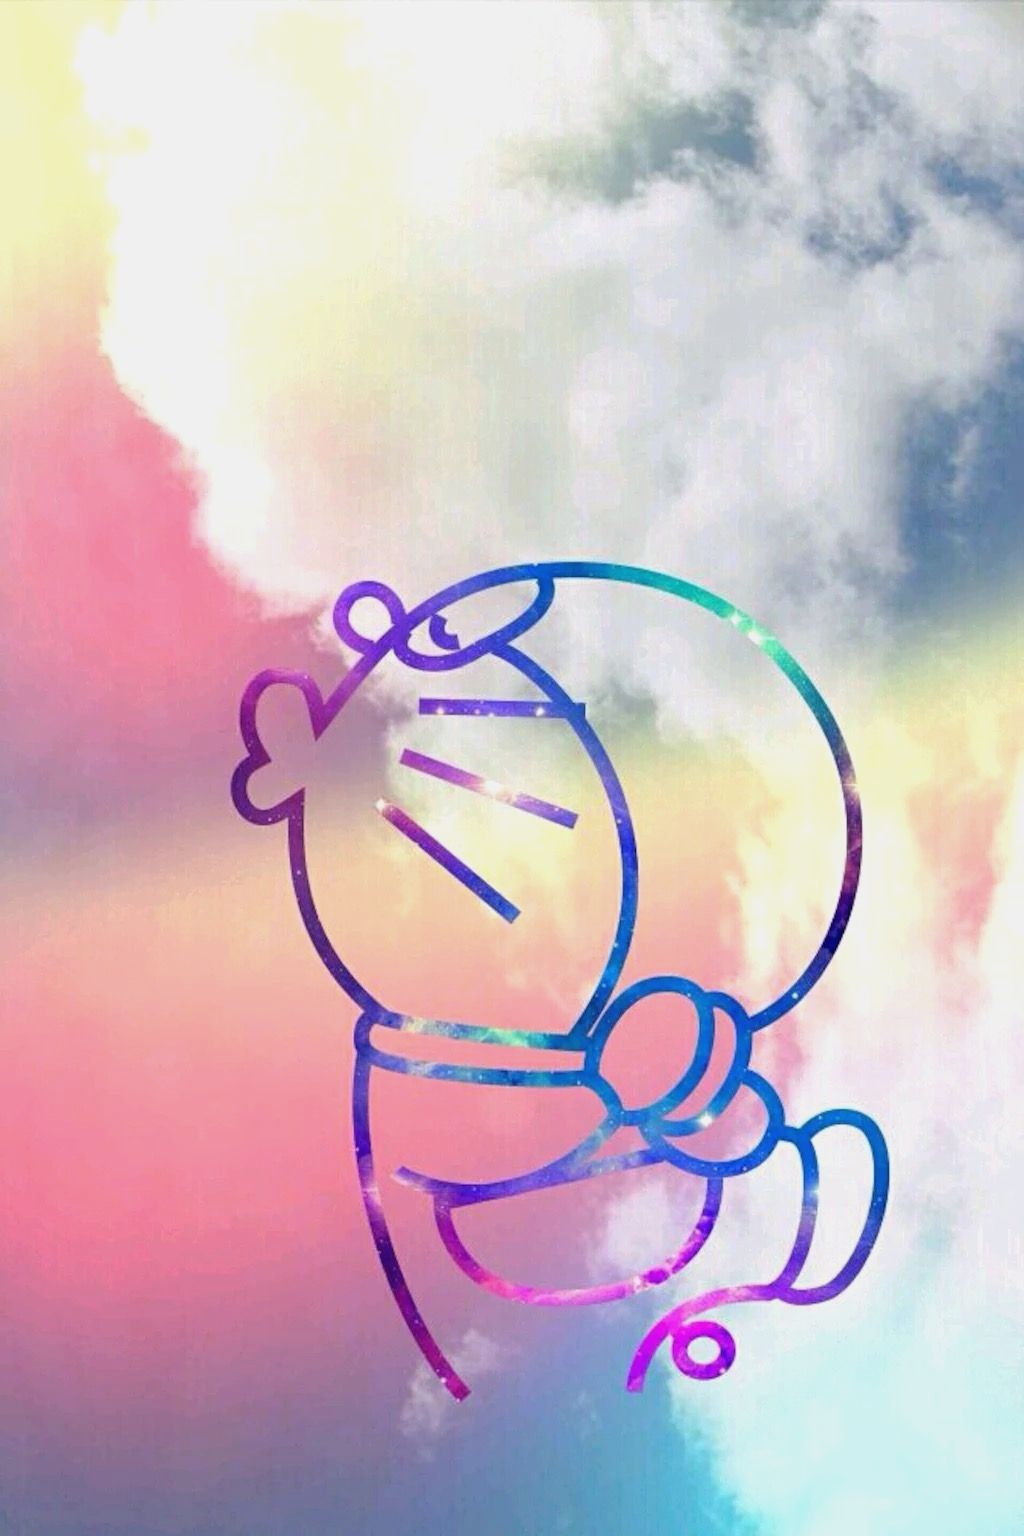 Doraemon iPhone Wallpaper Free Doraemon iPhone Background